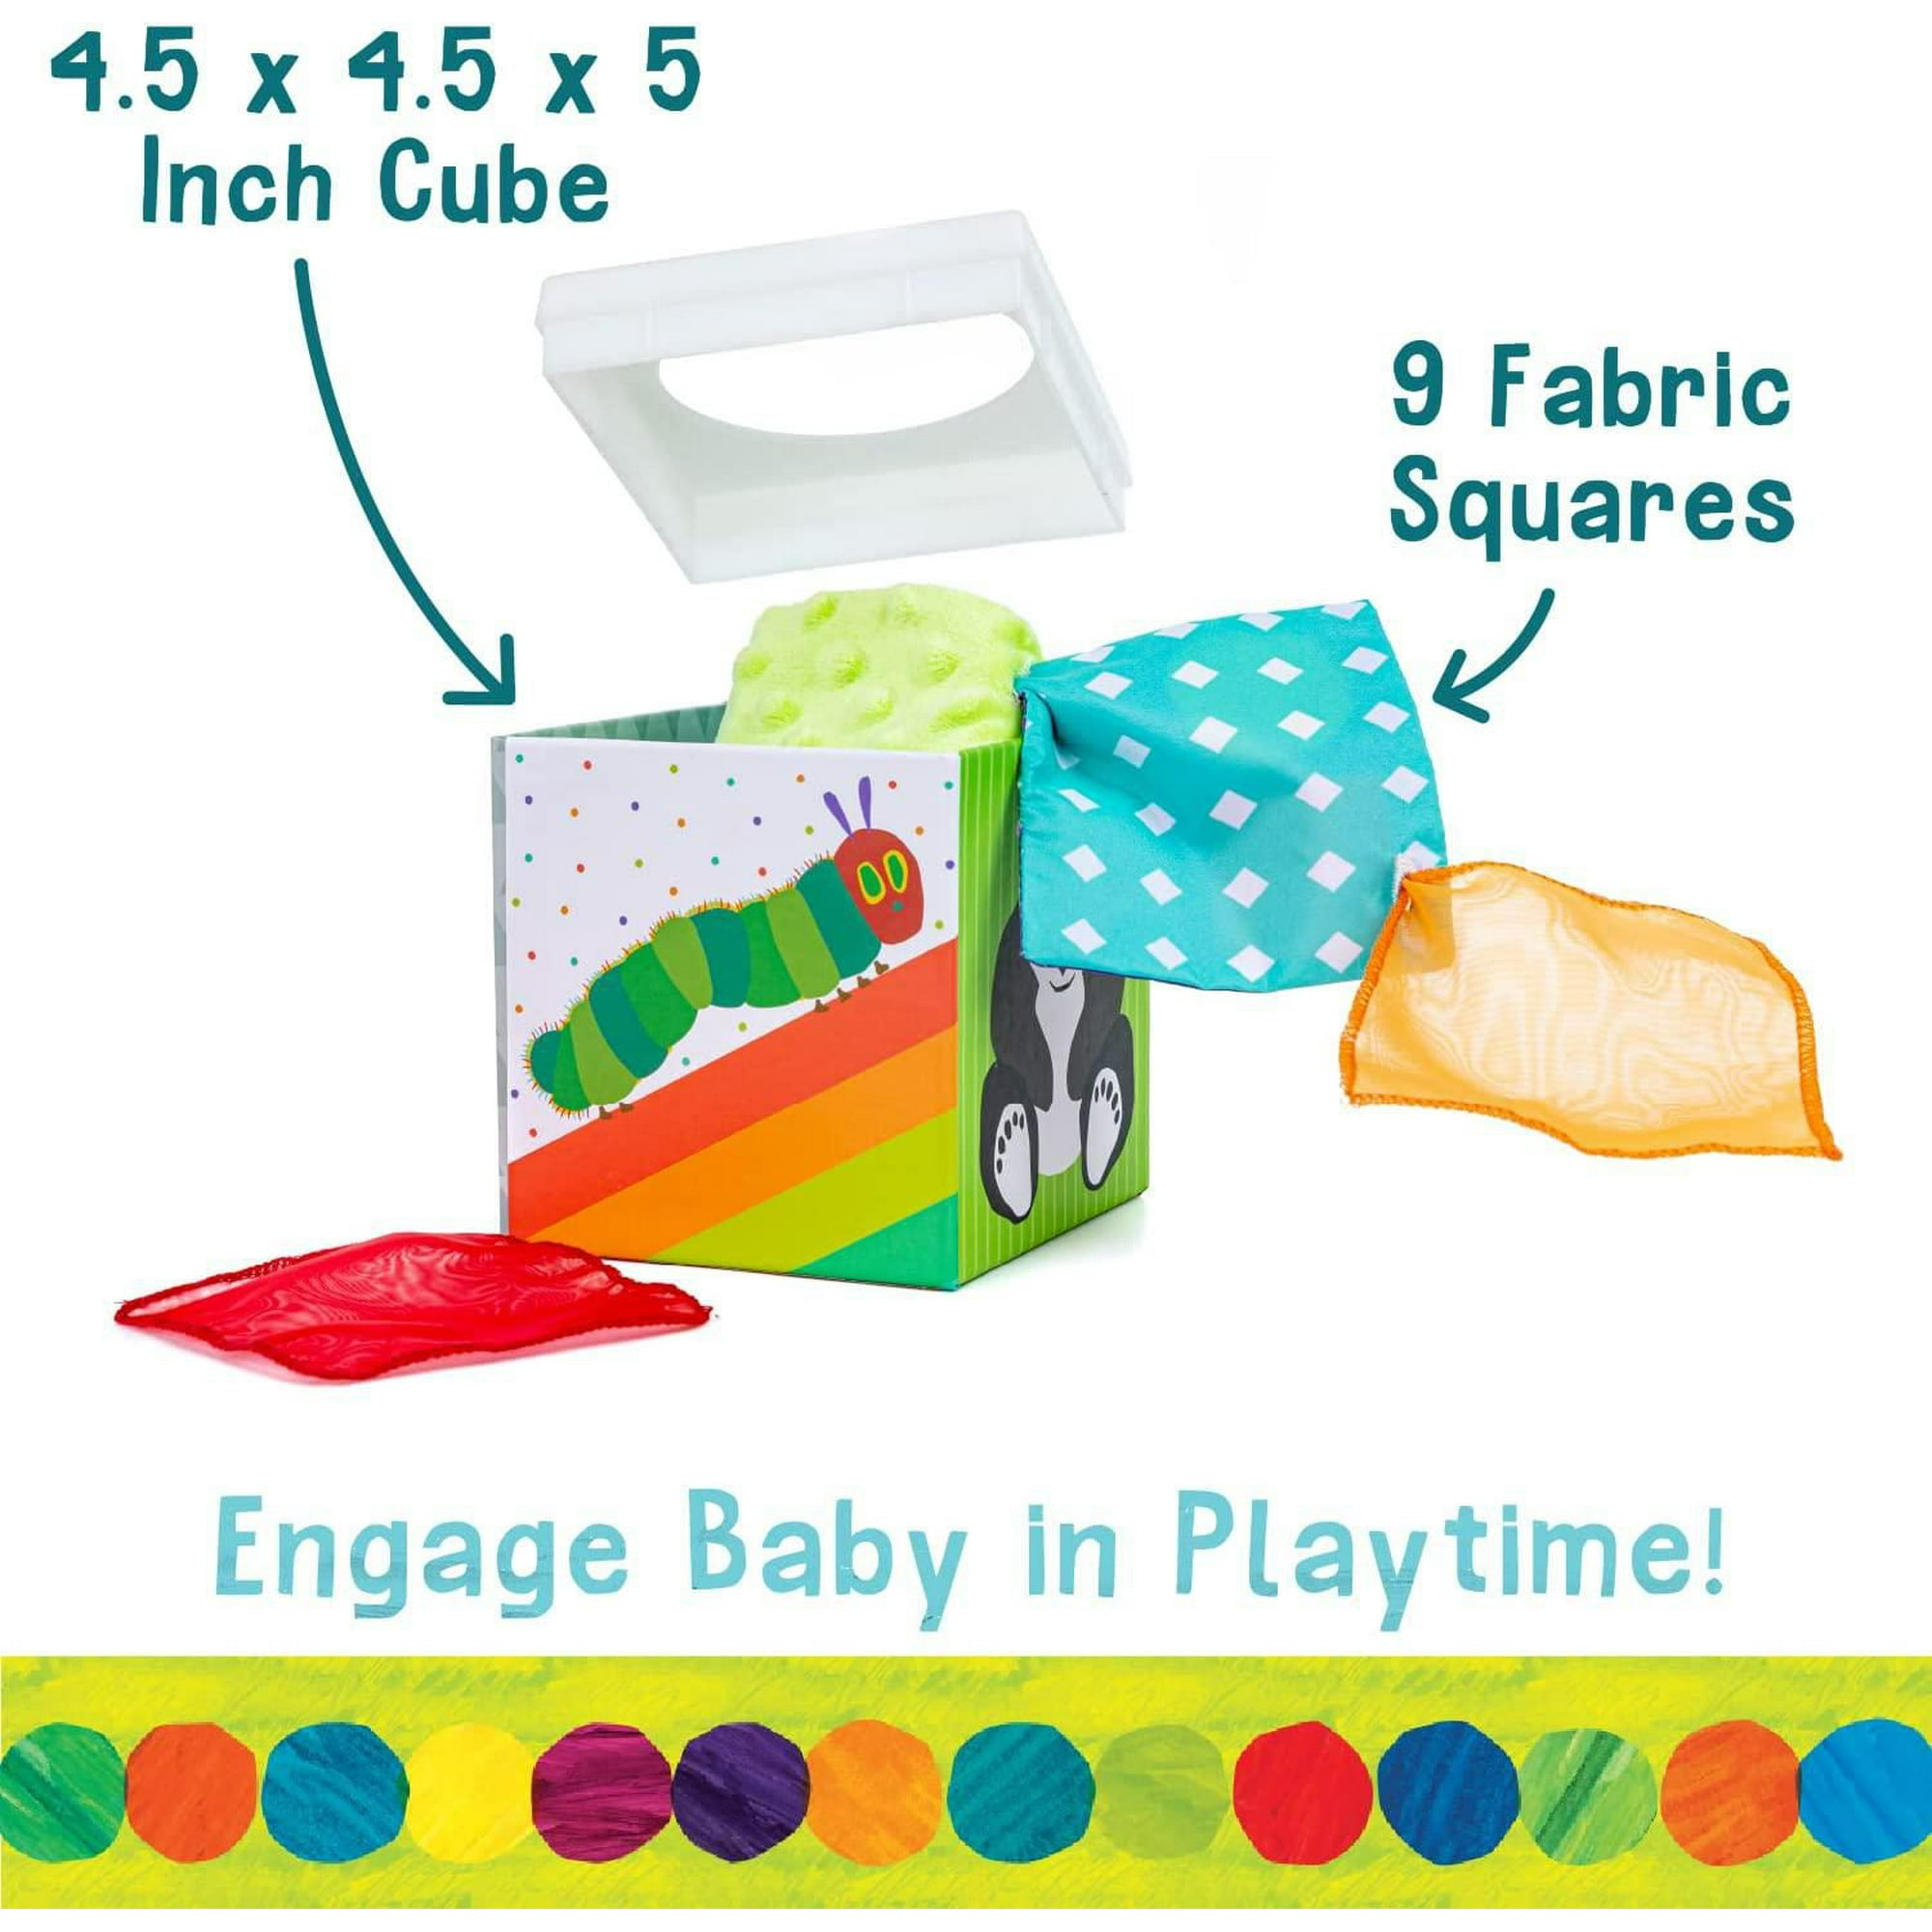 The World of Eric Carle Tissue Box Sensory Toy 